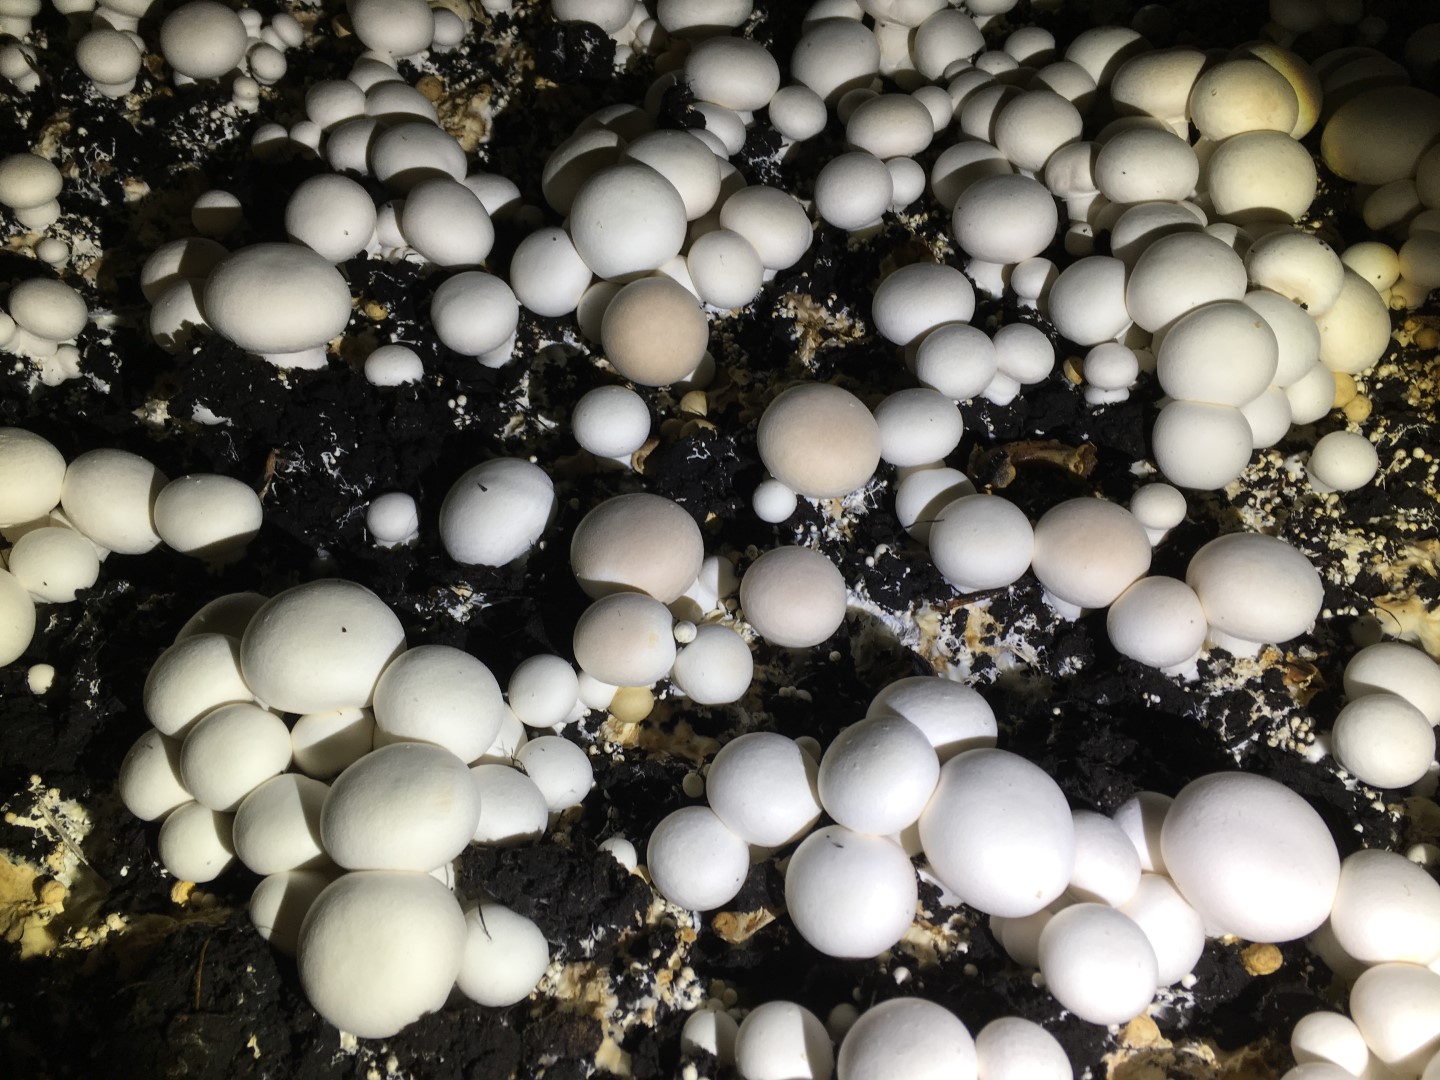 Off-white mushrooms symptom of Mushroom Virus X